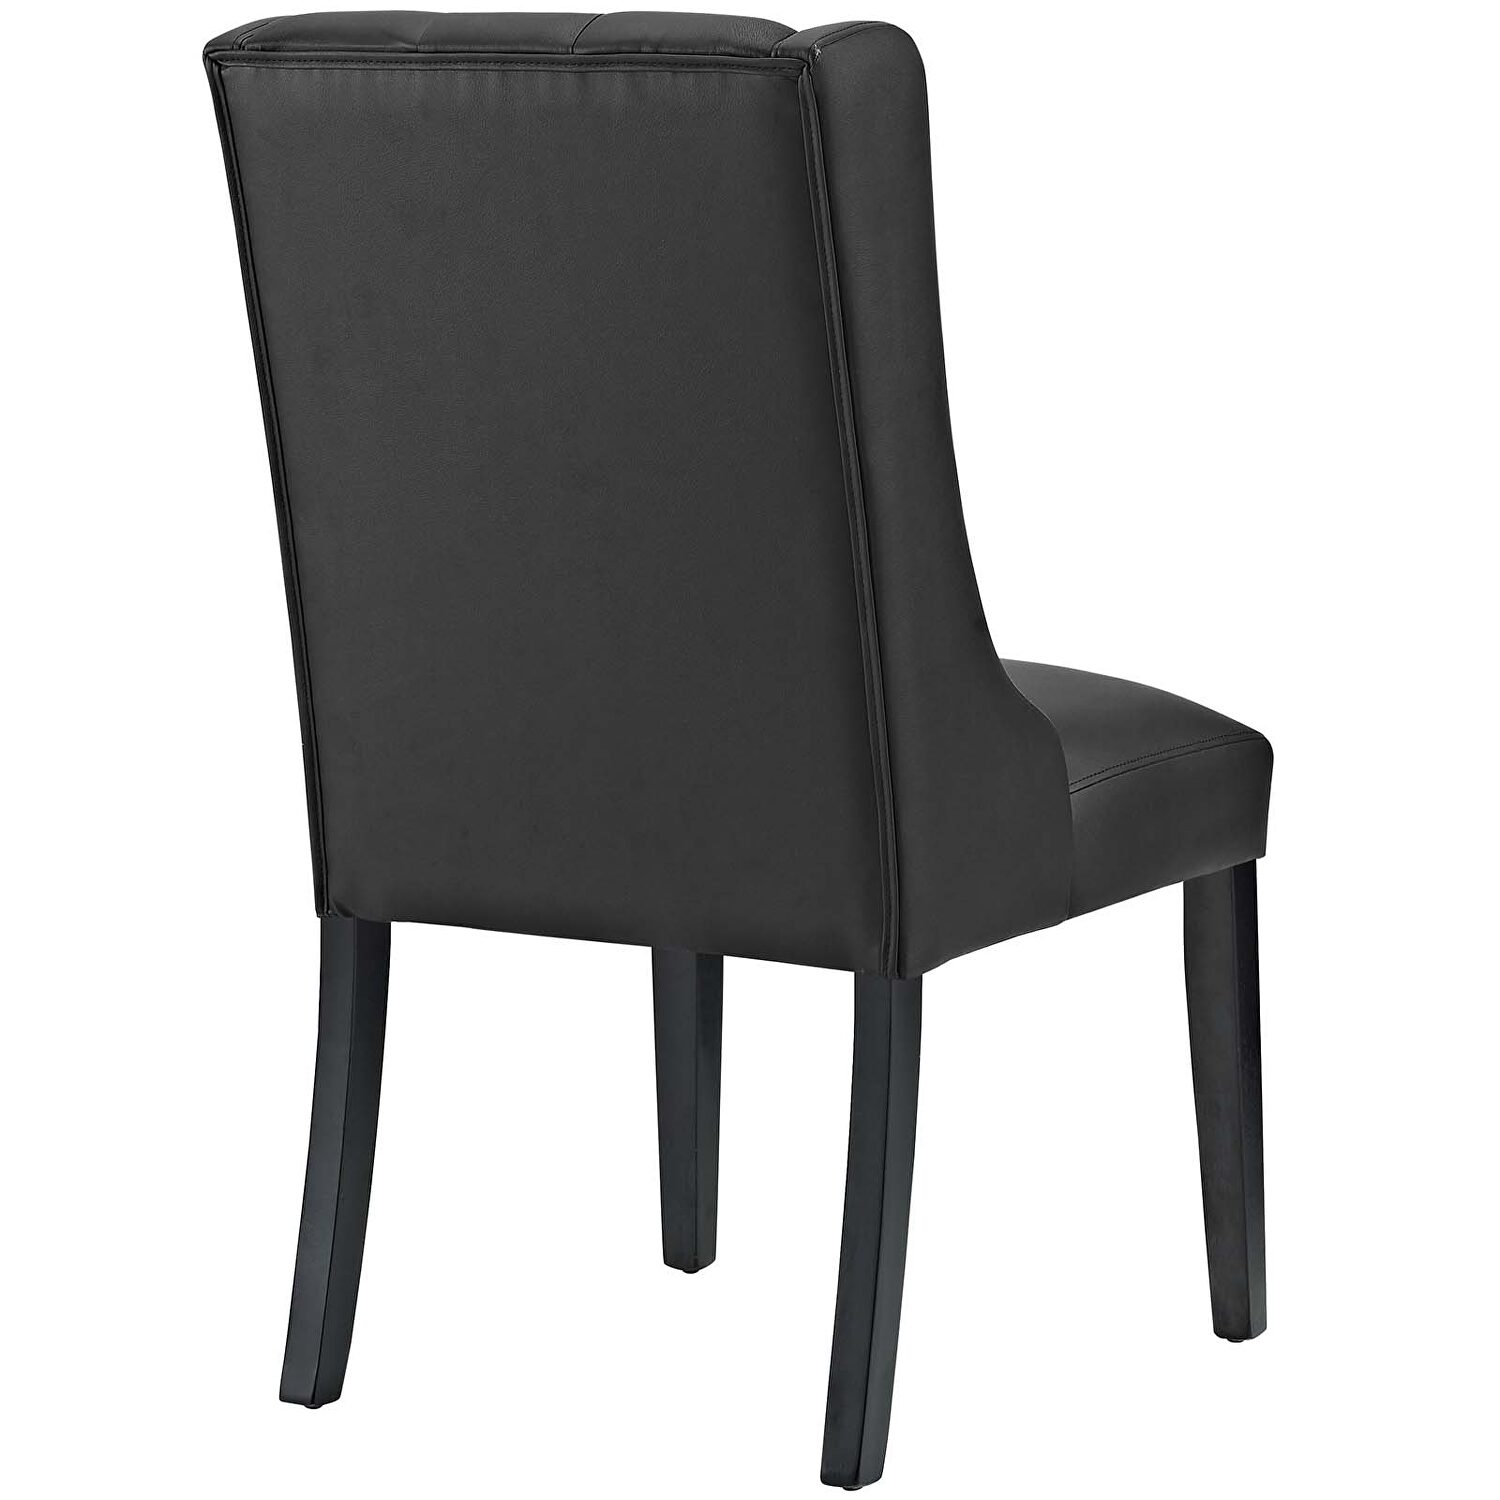 EEI-2234-BLK Modway Baronet Vinyl Dining Chair in Black Modway Inc